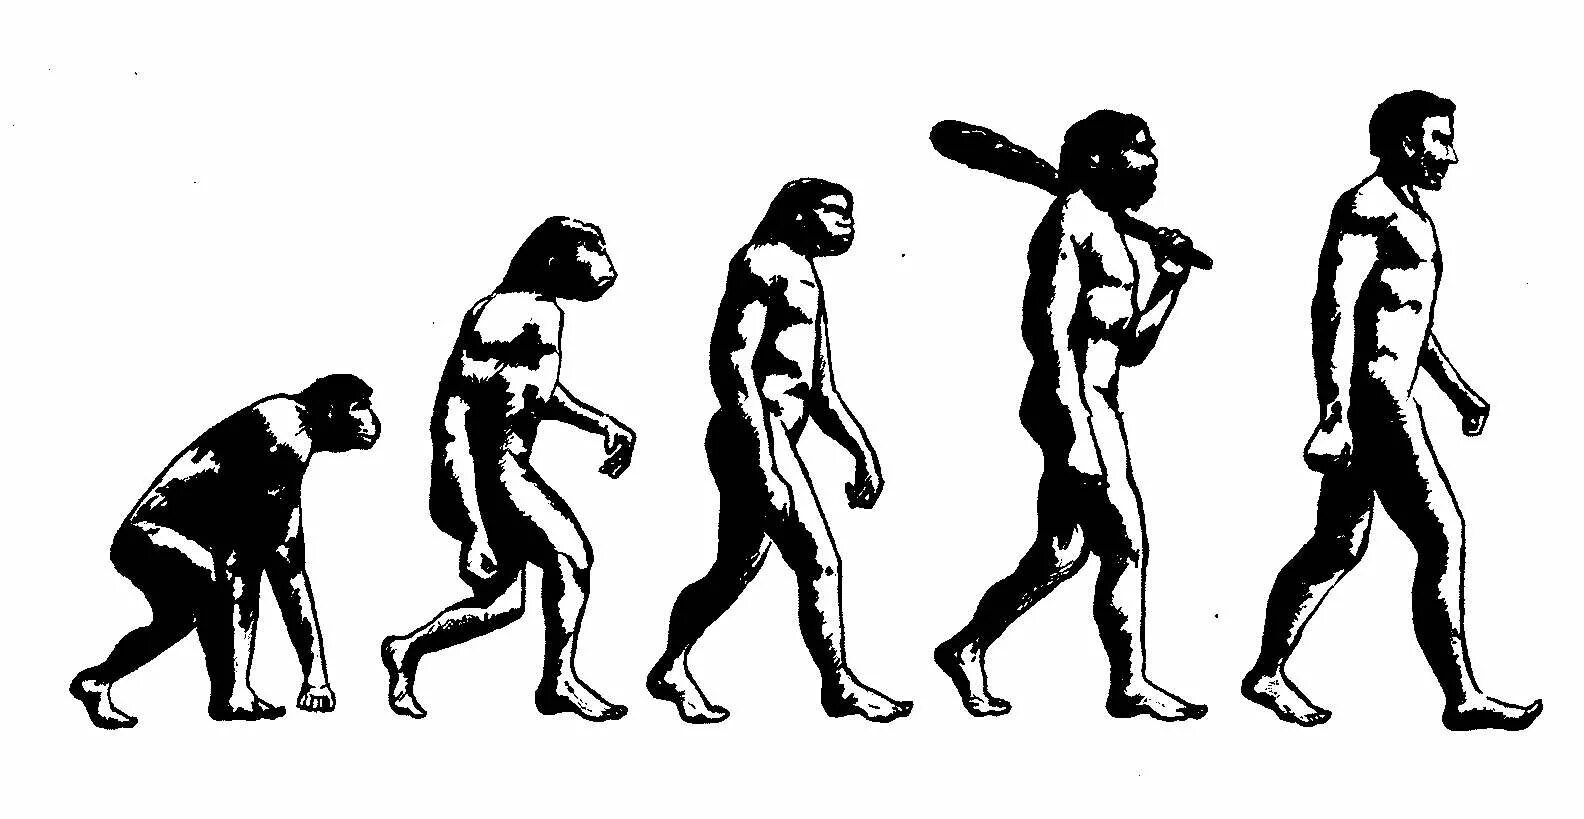 Жизни путем эволюции. Эволюция человека Дарвина. Антропогенез Дарвин. Ступени эволюции человека по Дарвину. Схема Дарвина Эволюция человека.